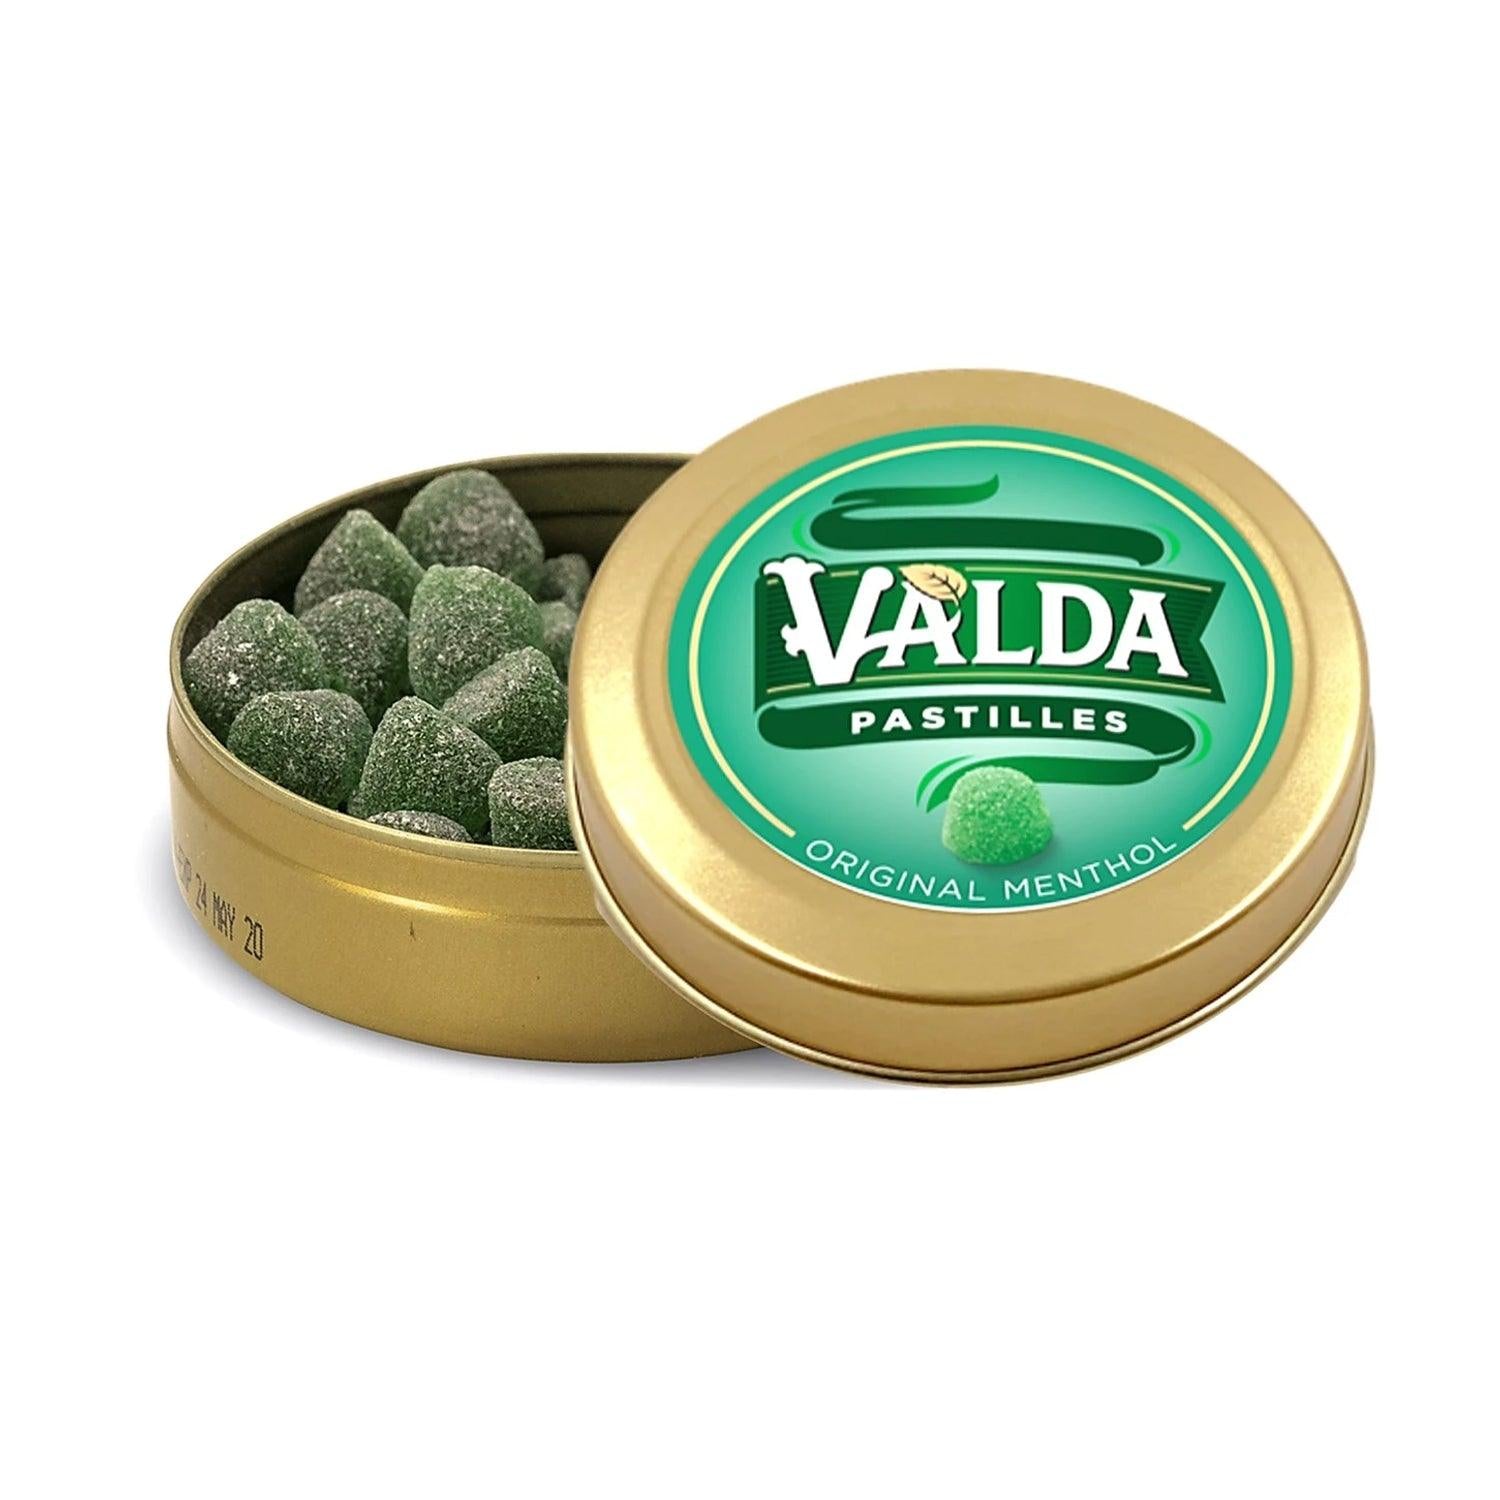 Buy Valda Pastilles Menthol 50 g Online